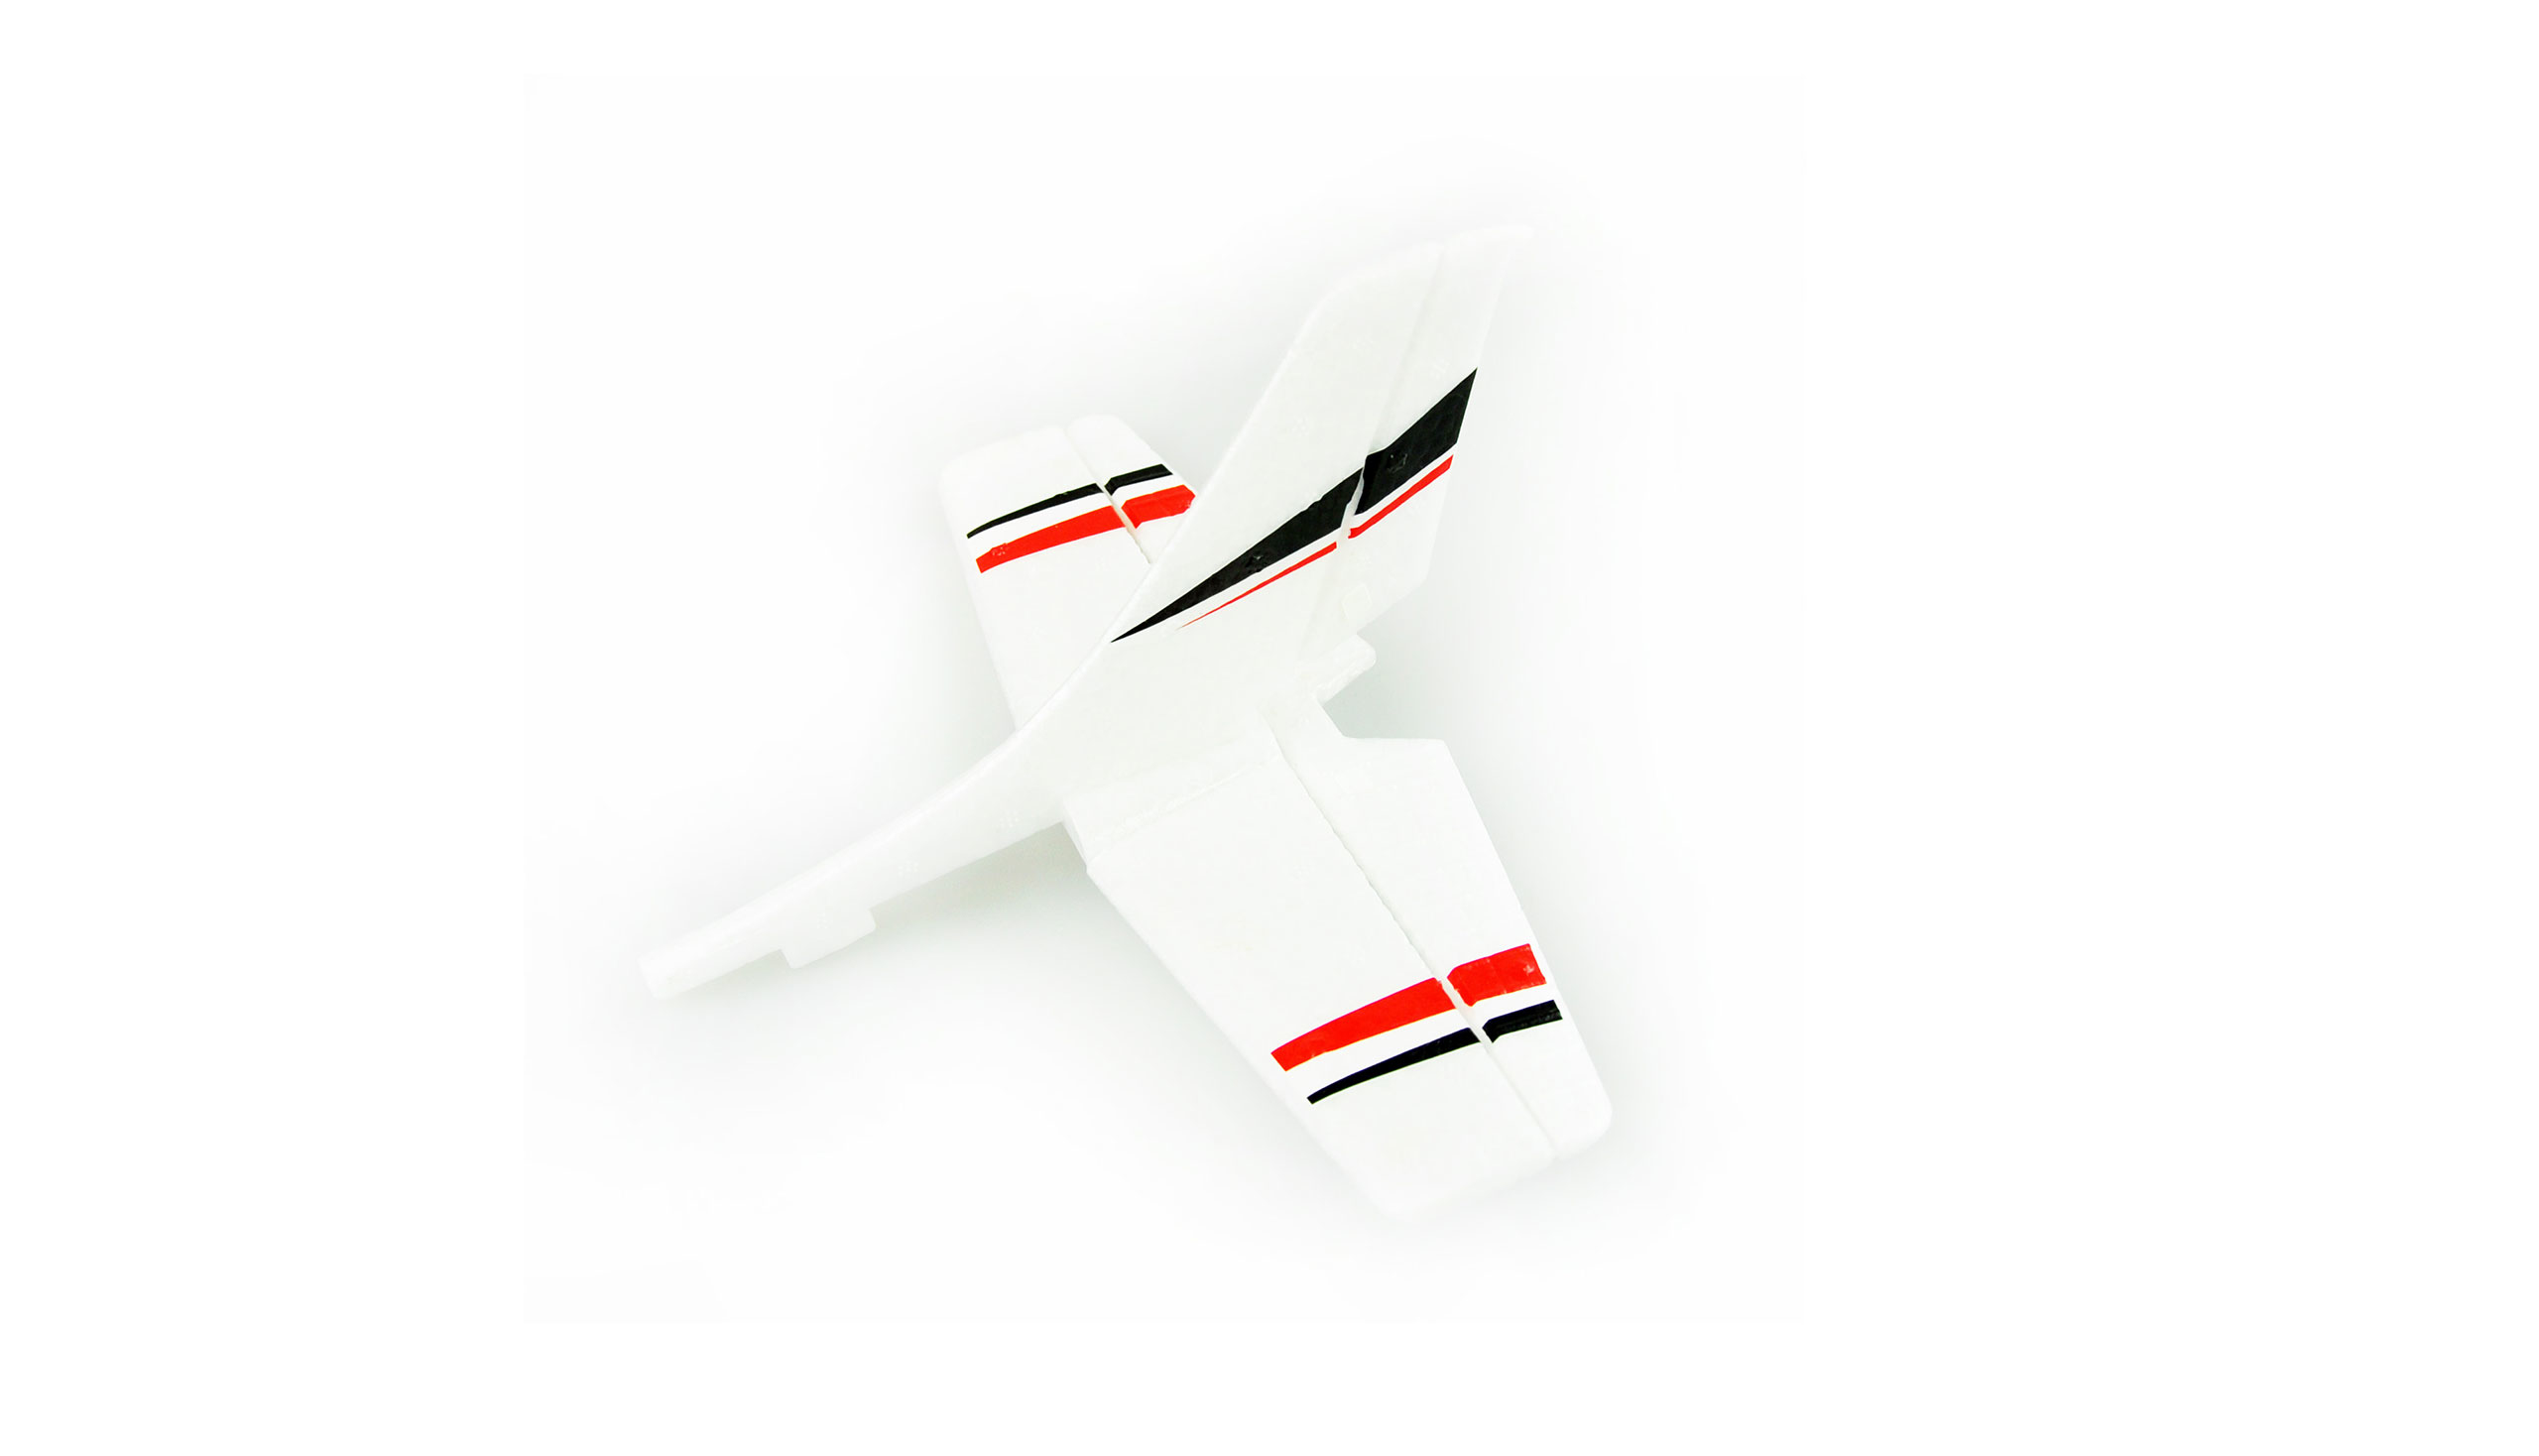 Amewi 045-V2959002 - Flügel - Schwarz - Rot - Weiß